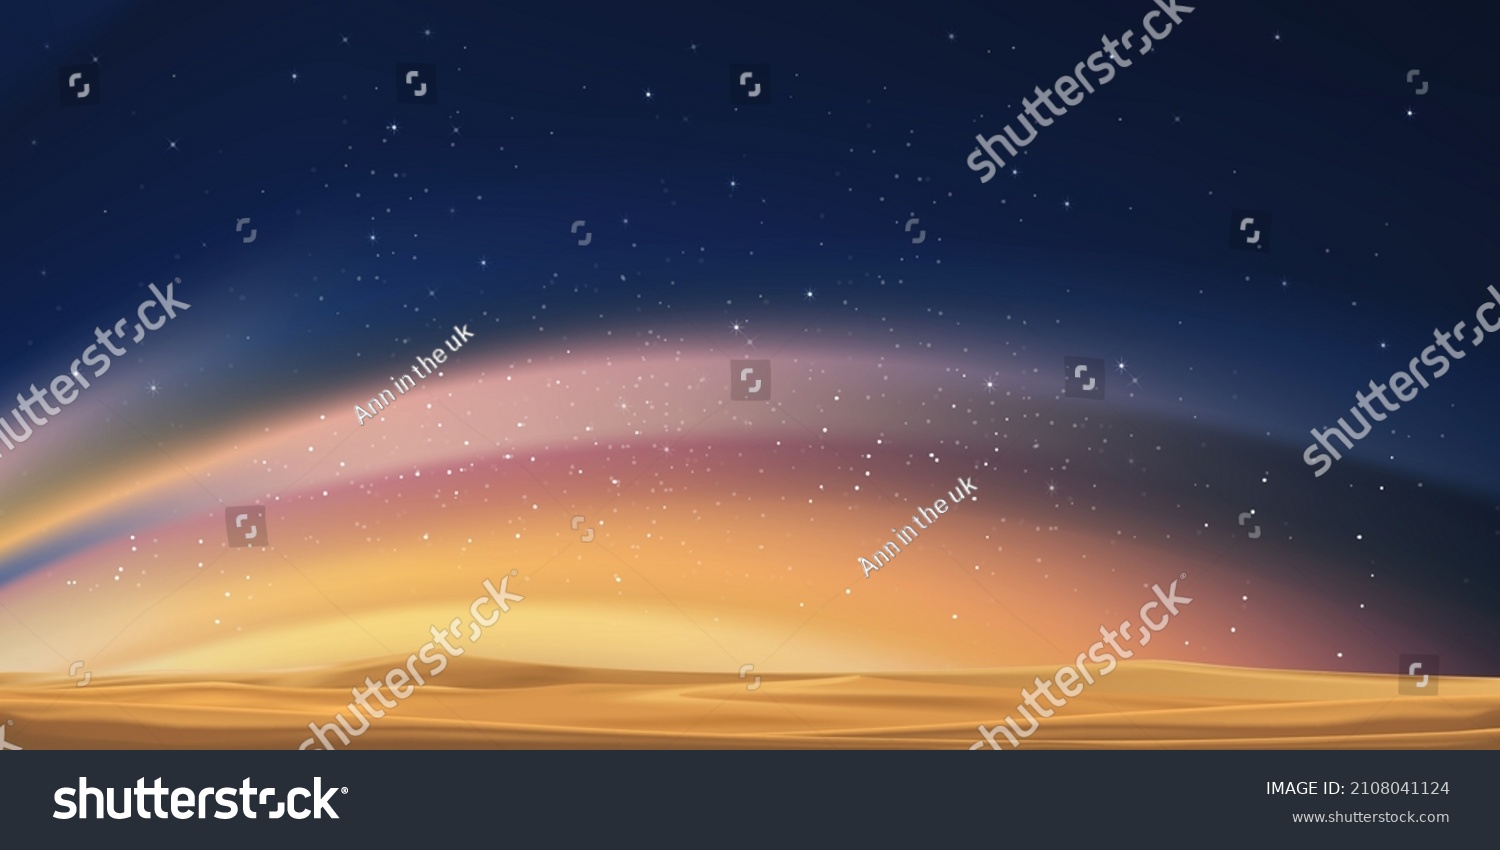 SVG of Sky Starry Night,Ramadan Background Sunset with Desert Sand Dune,Beautiful Universe Space of Galaxy with Milky Way landscape.Vector Islamic for Ramadan Kareem,Eid Mubarak,Eid al adha,Eid al fitr svg